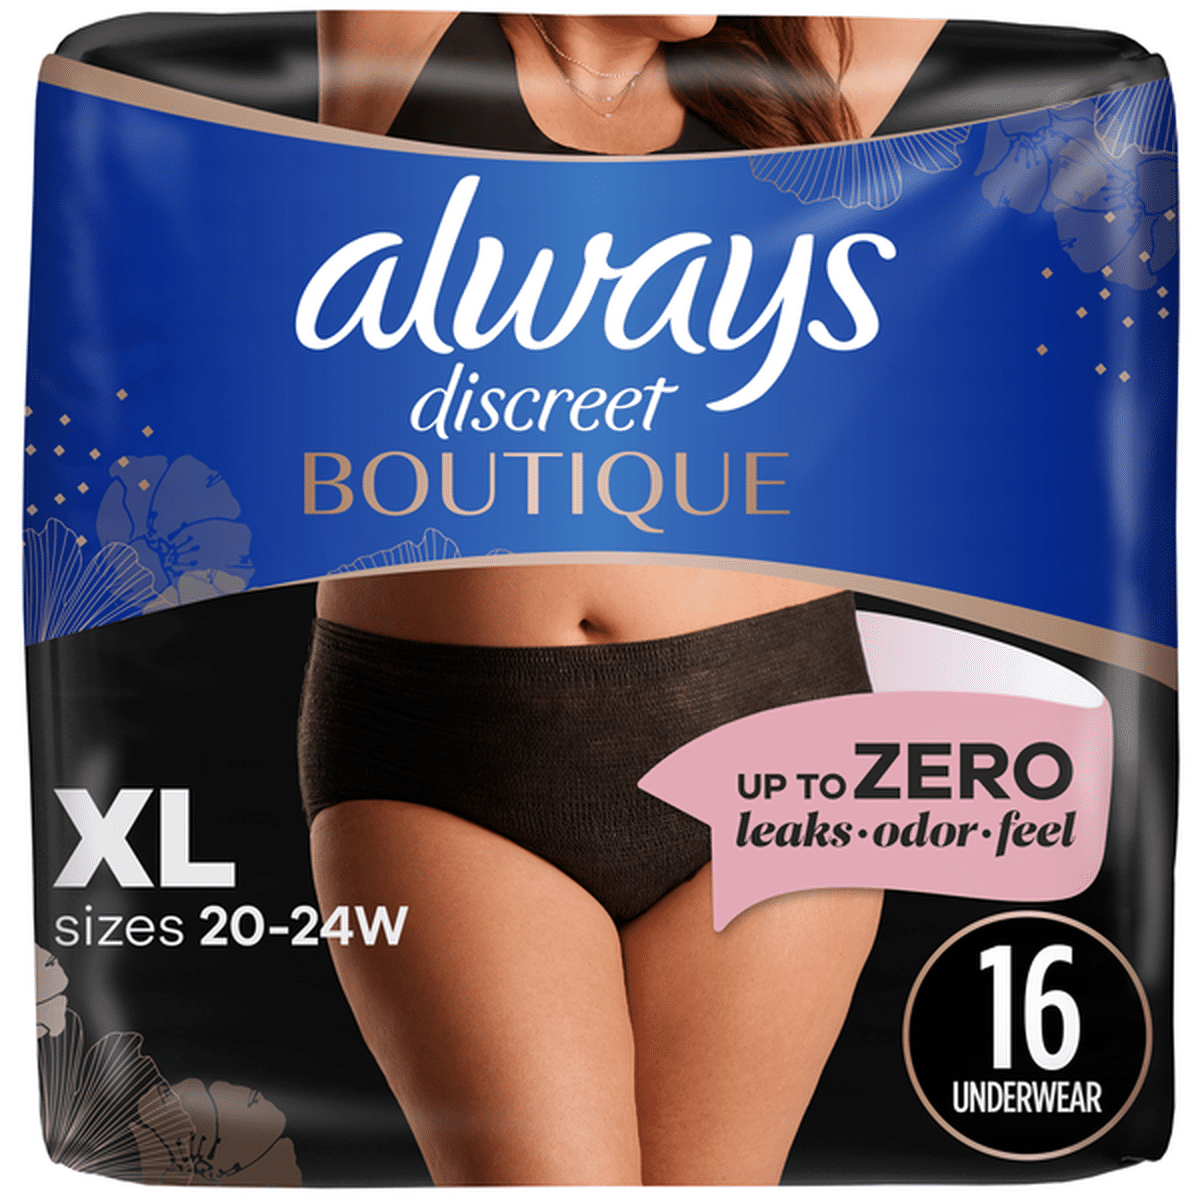 Always Discreet Discreet Boutique Underwear, XL (16 ct) Delivery